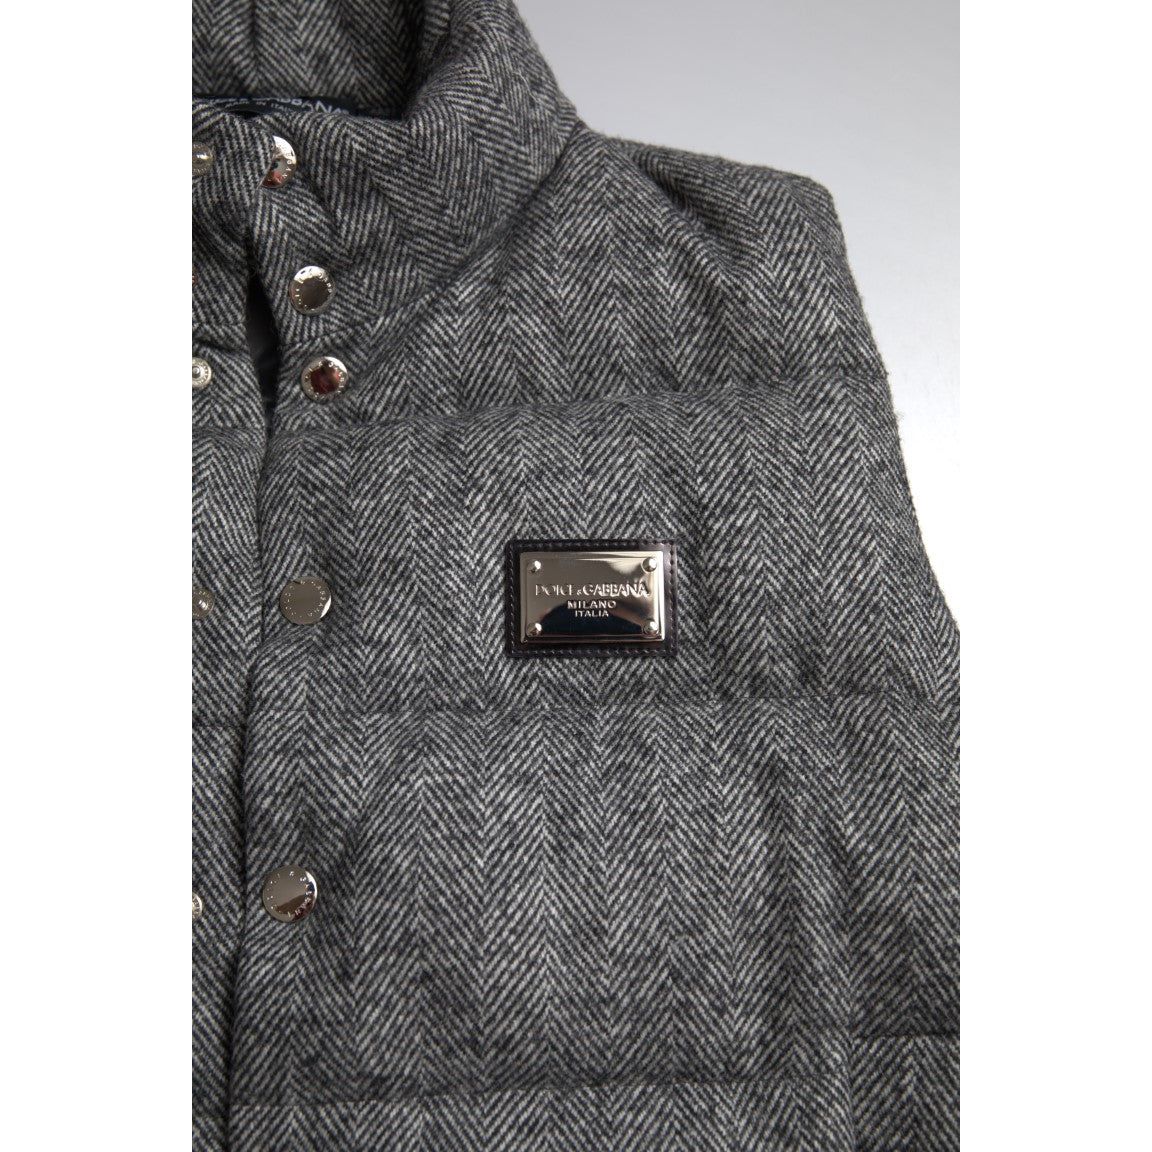 Dolce & Gabbana Elegant Chevron Knit Wool Blend Vest Jacket gray-wool-chevron-knit-padded-vest-jacket